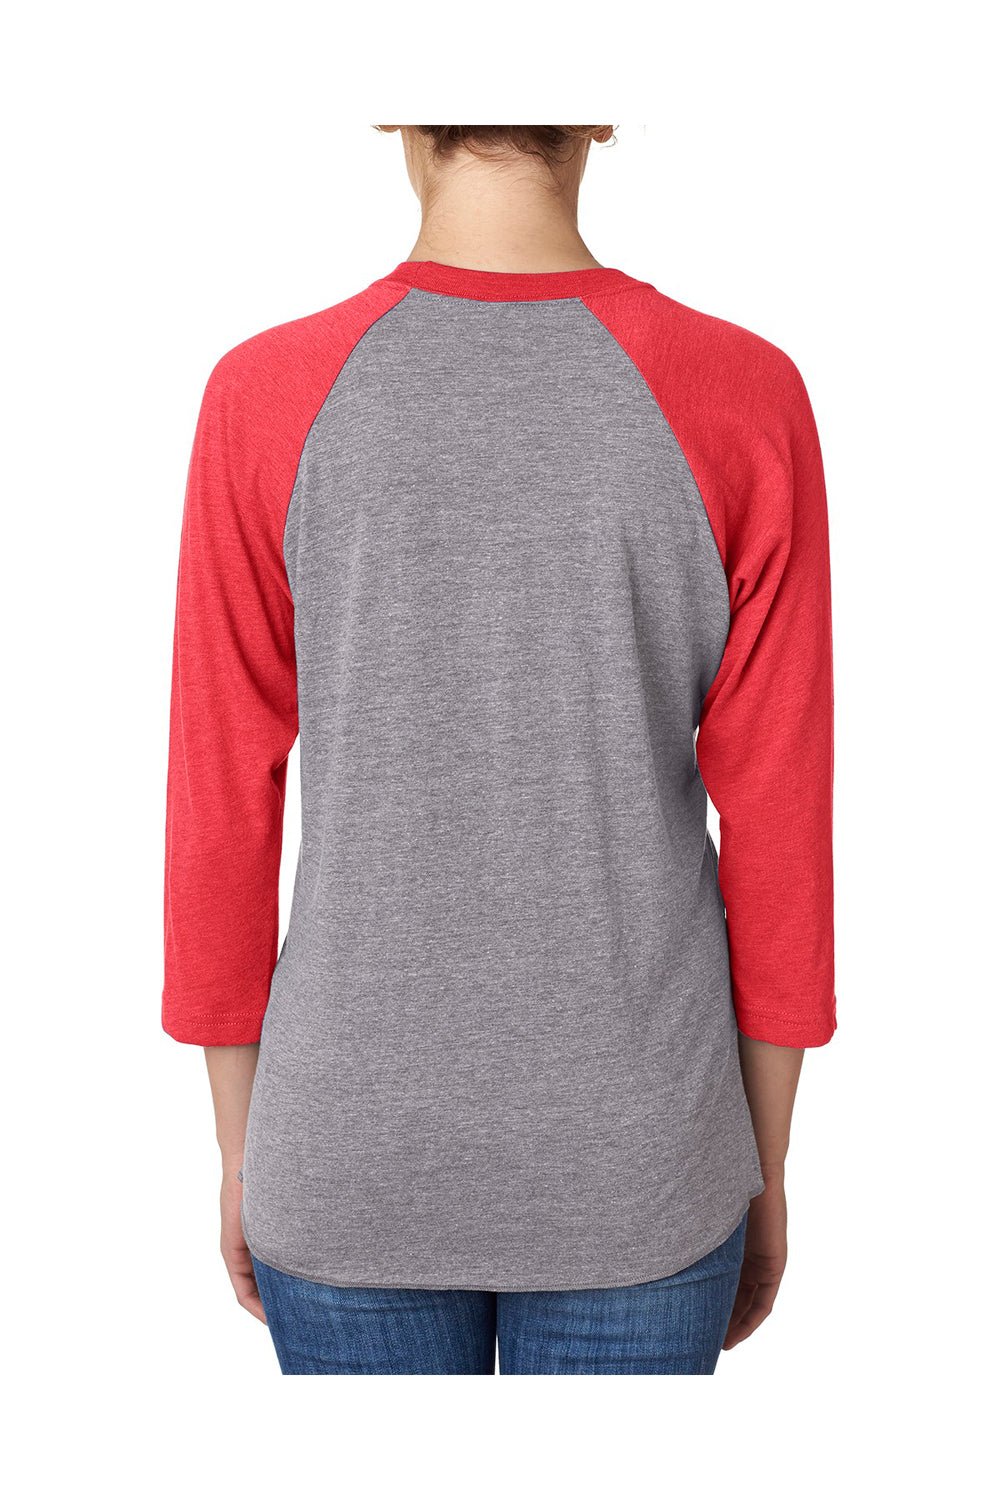 Next Level 6051 Mens Jersey 3/4 Sleeve Crewneck T-Shirt Heather Grey/Red Back